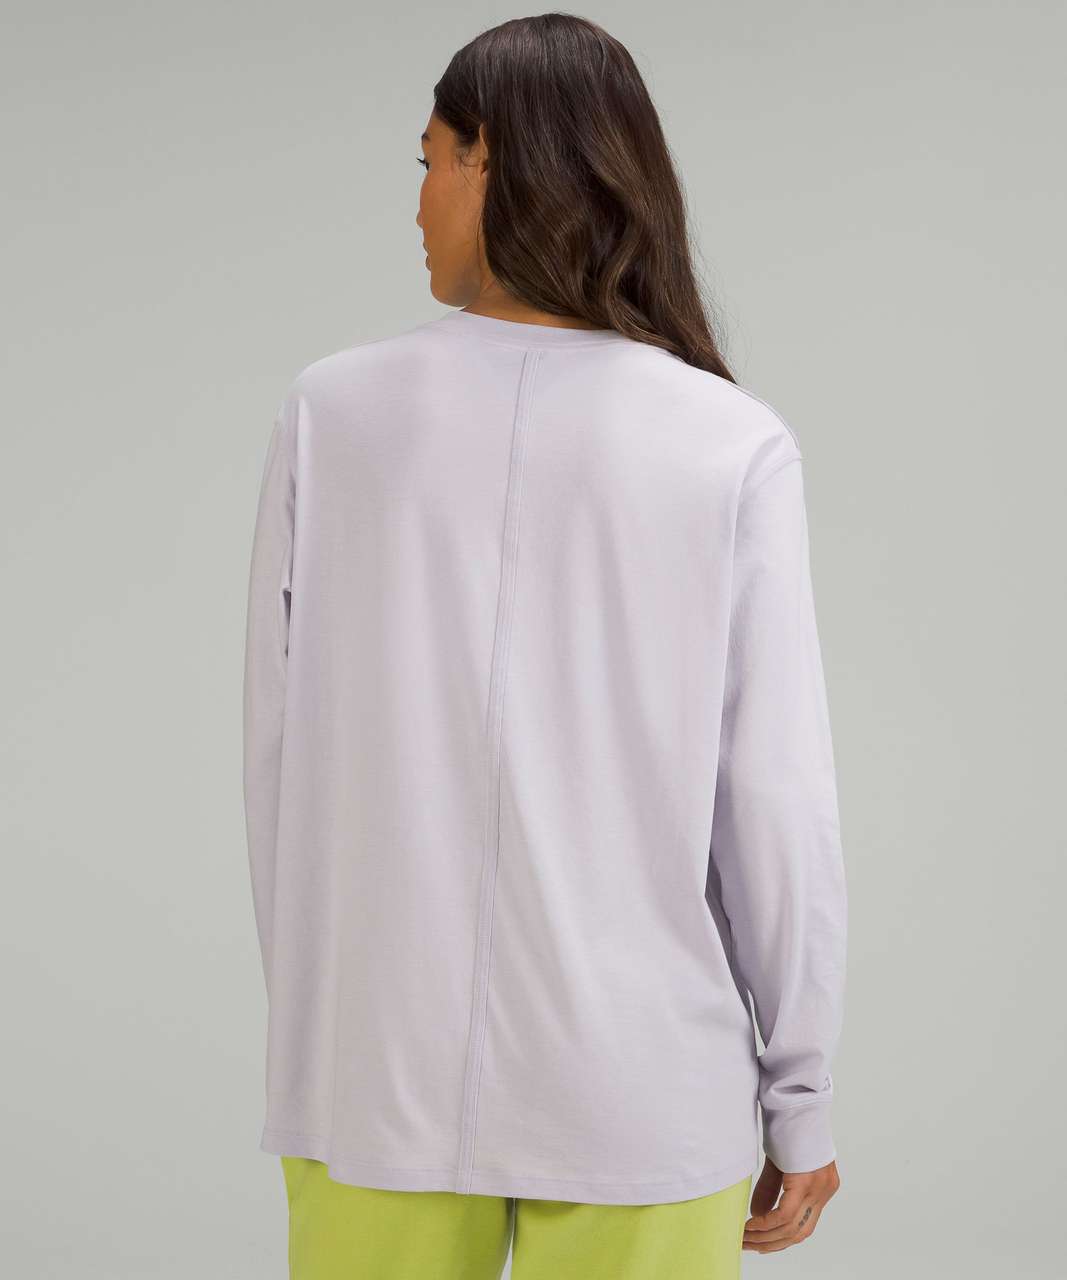 Lululemon All Yours Cotton Long Sleeve Shirt - Faint Lavender